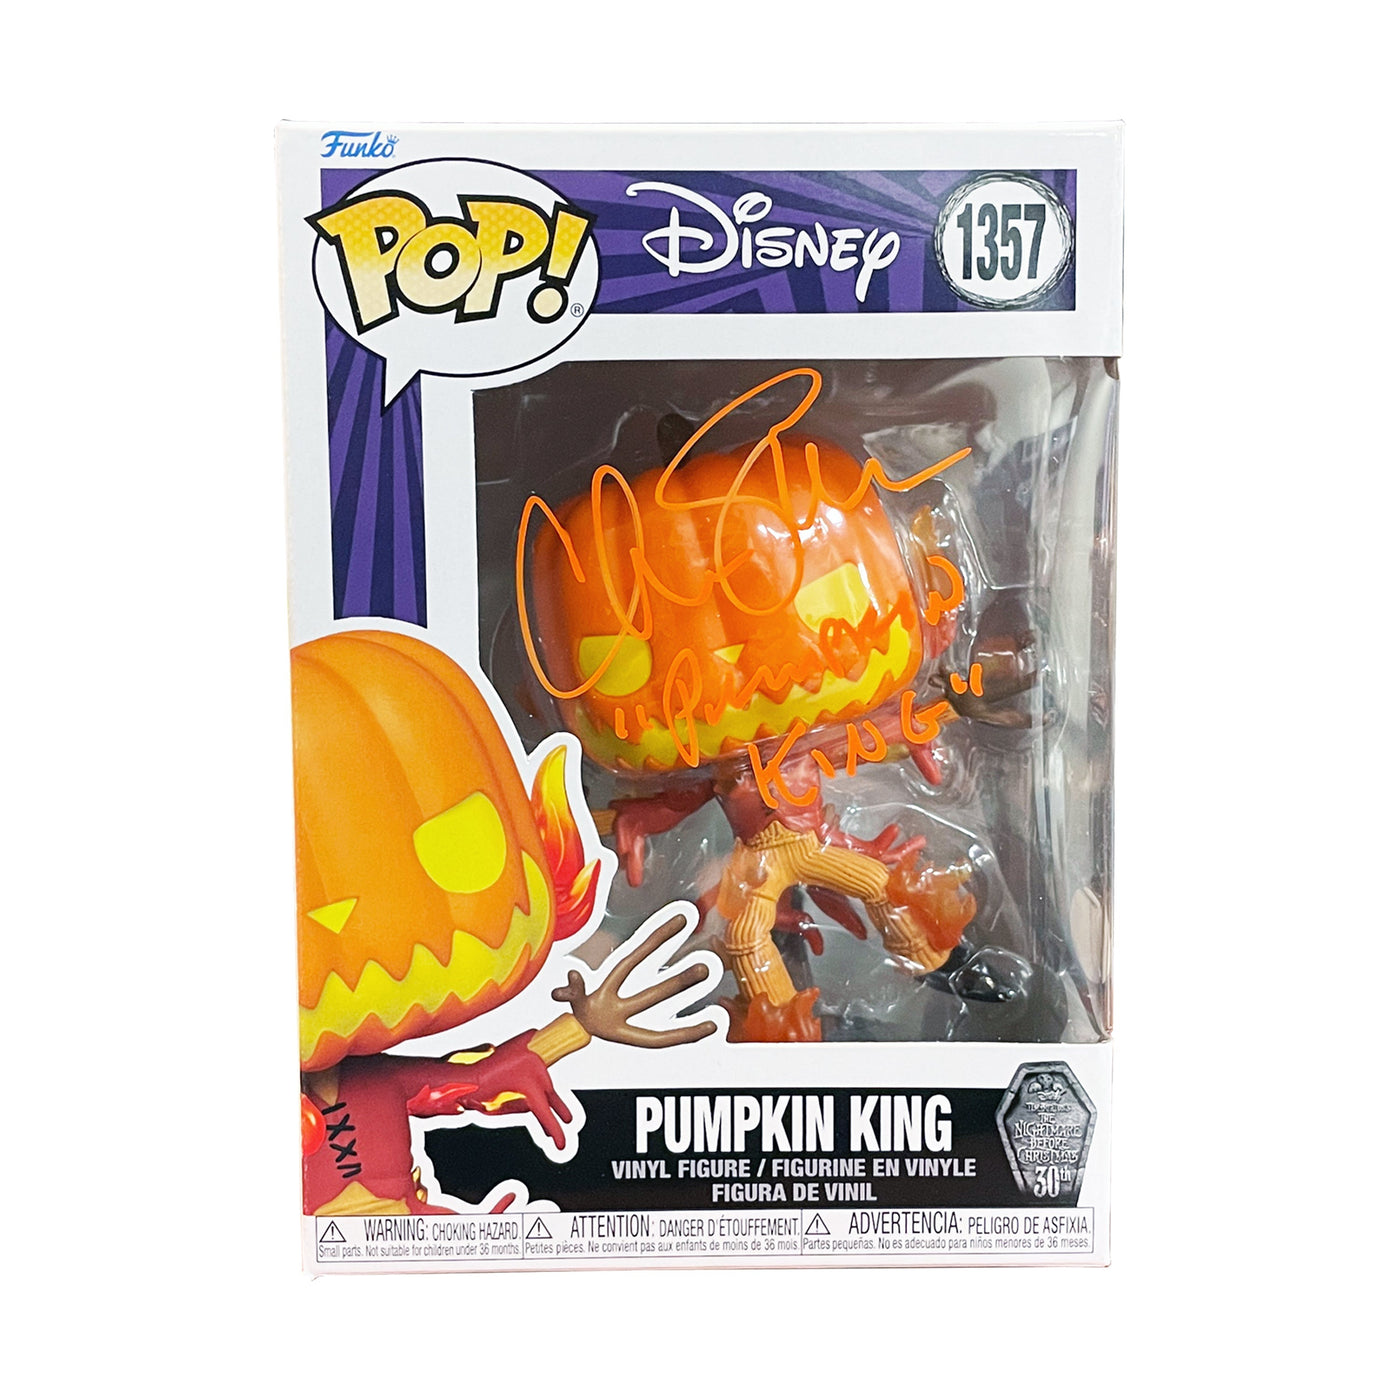 Chris Sarandon Signed Funko Pop Disney Pumpkin King Autographed JSA COA